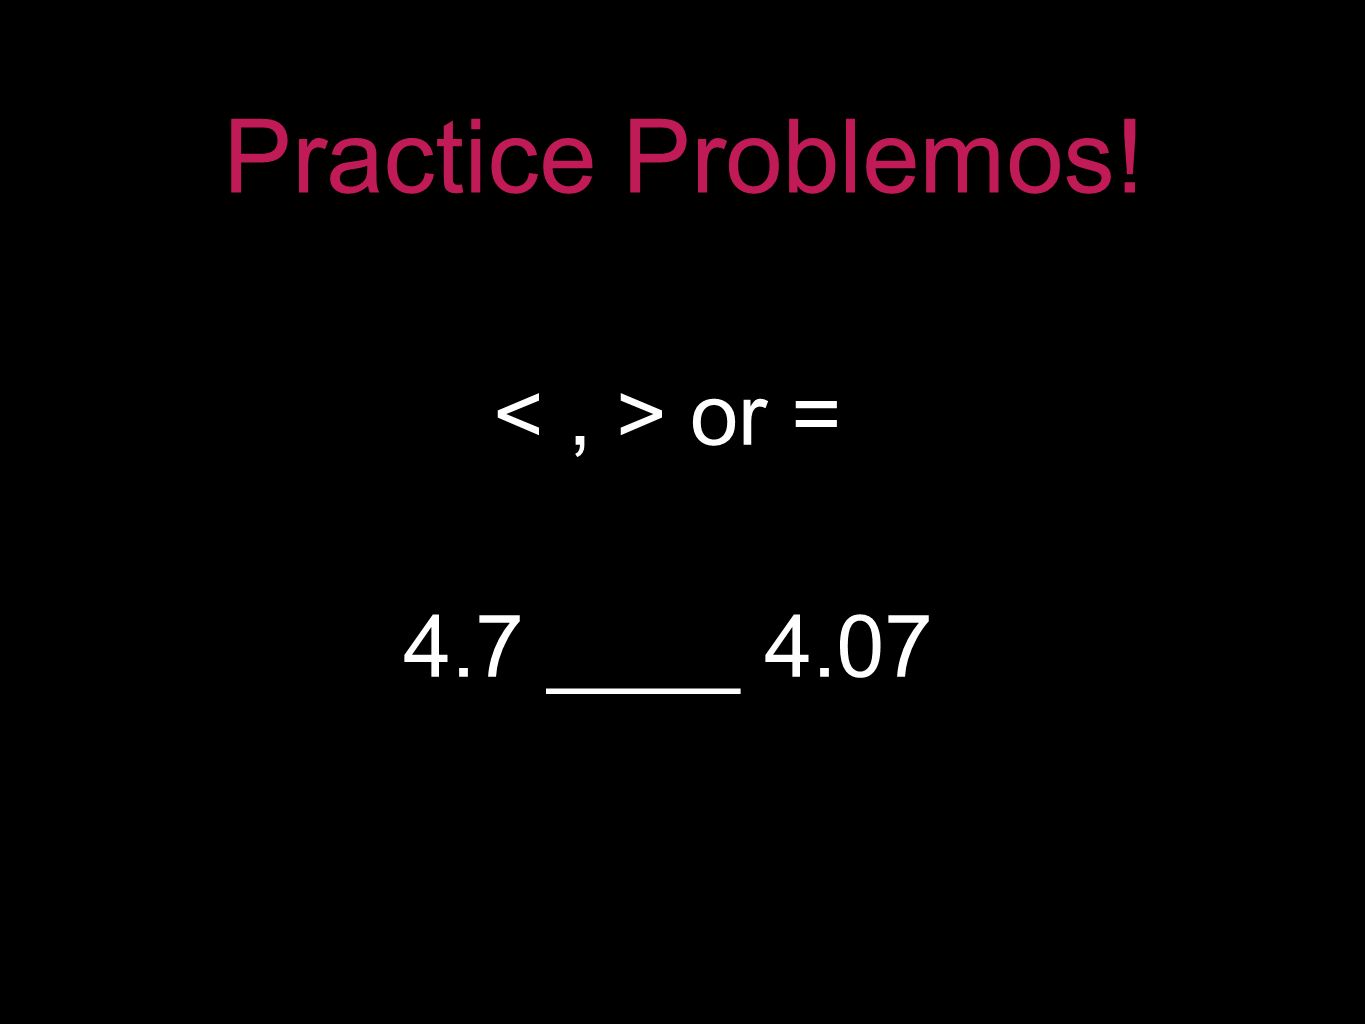 Practice Problemos! 4.7 ____ 4.07 or =